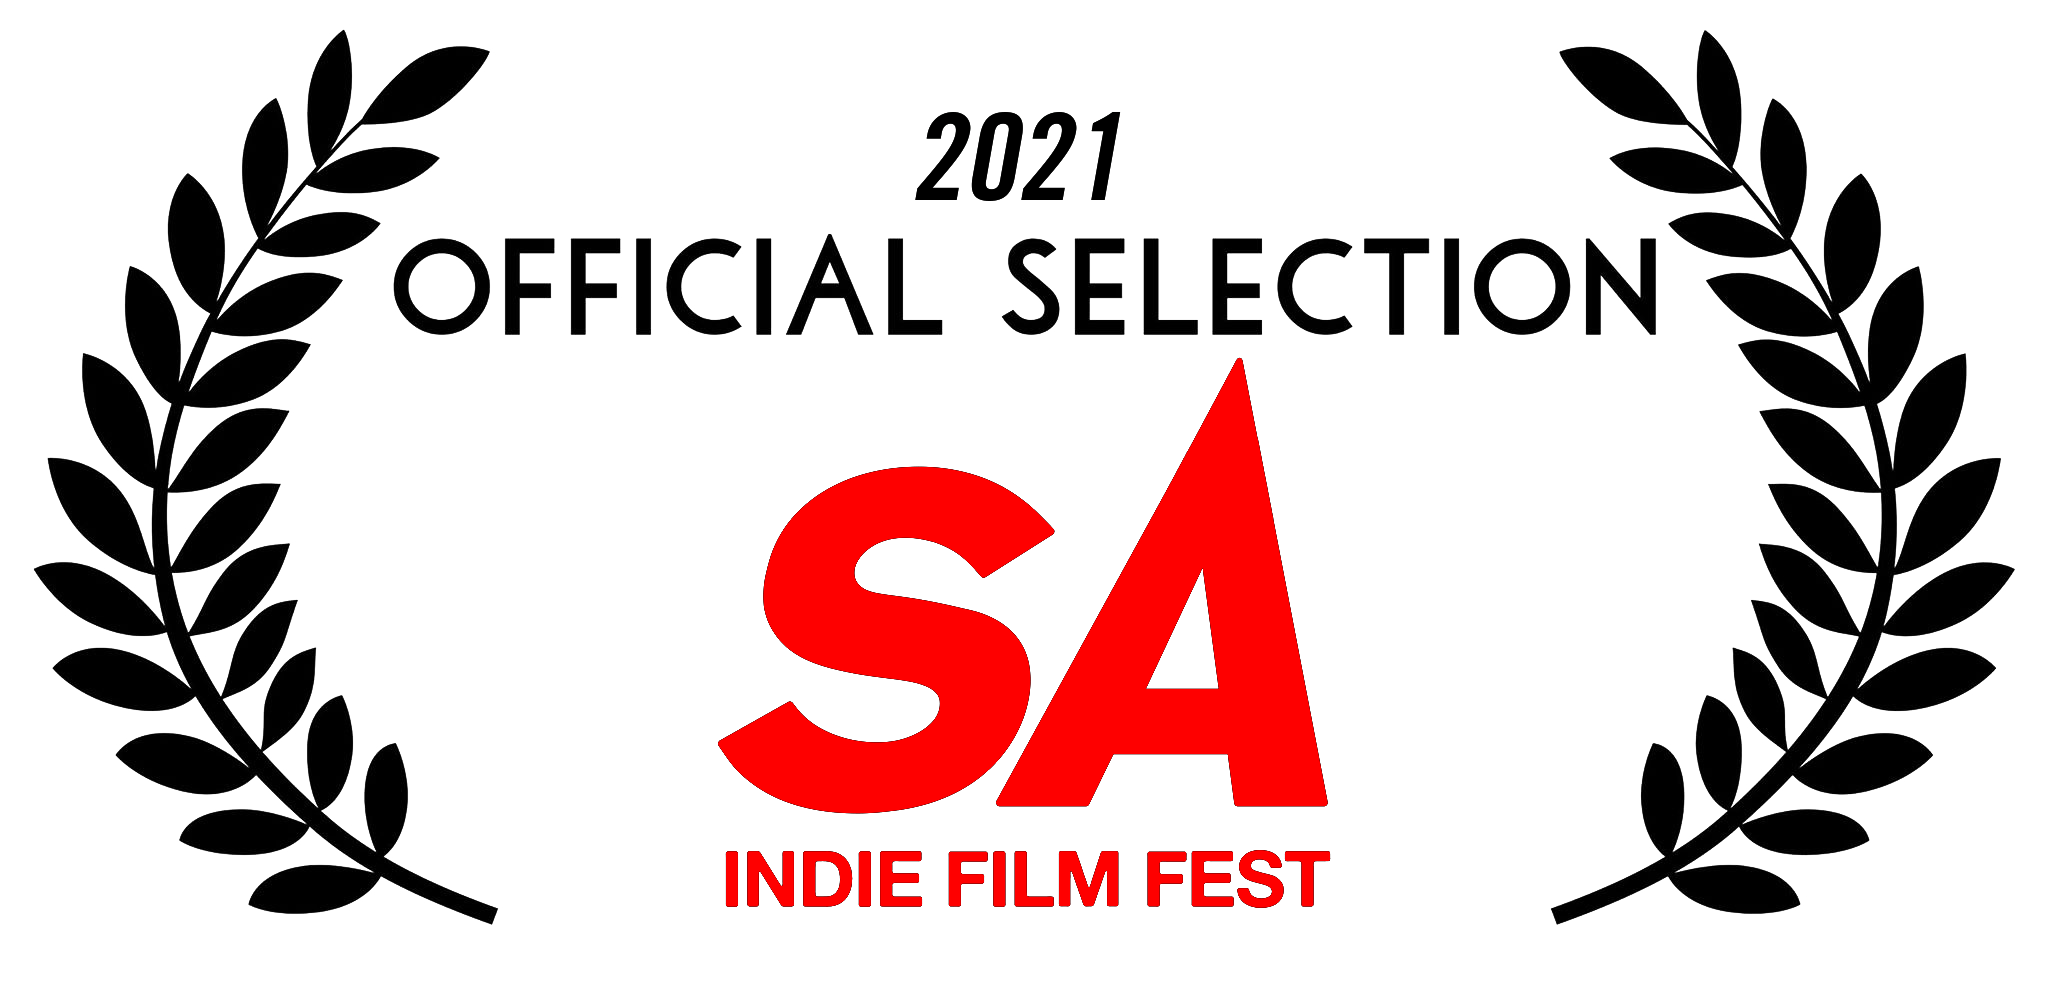 SA_INDIE_FILM_FEST_OFFICIAL_SELECTION_LAURELS_2021_-_BLACK.png